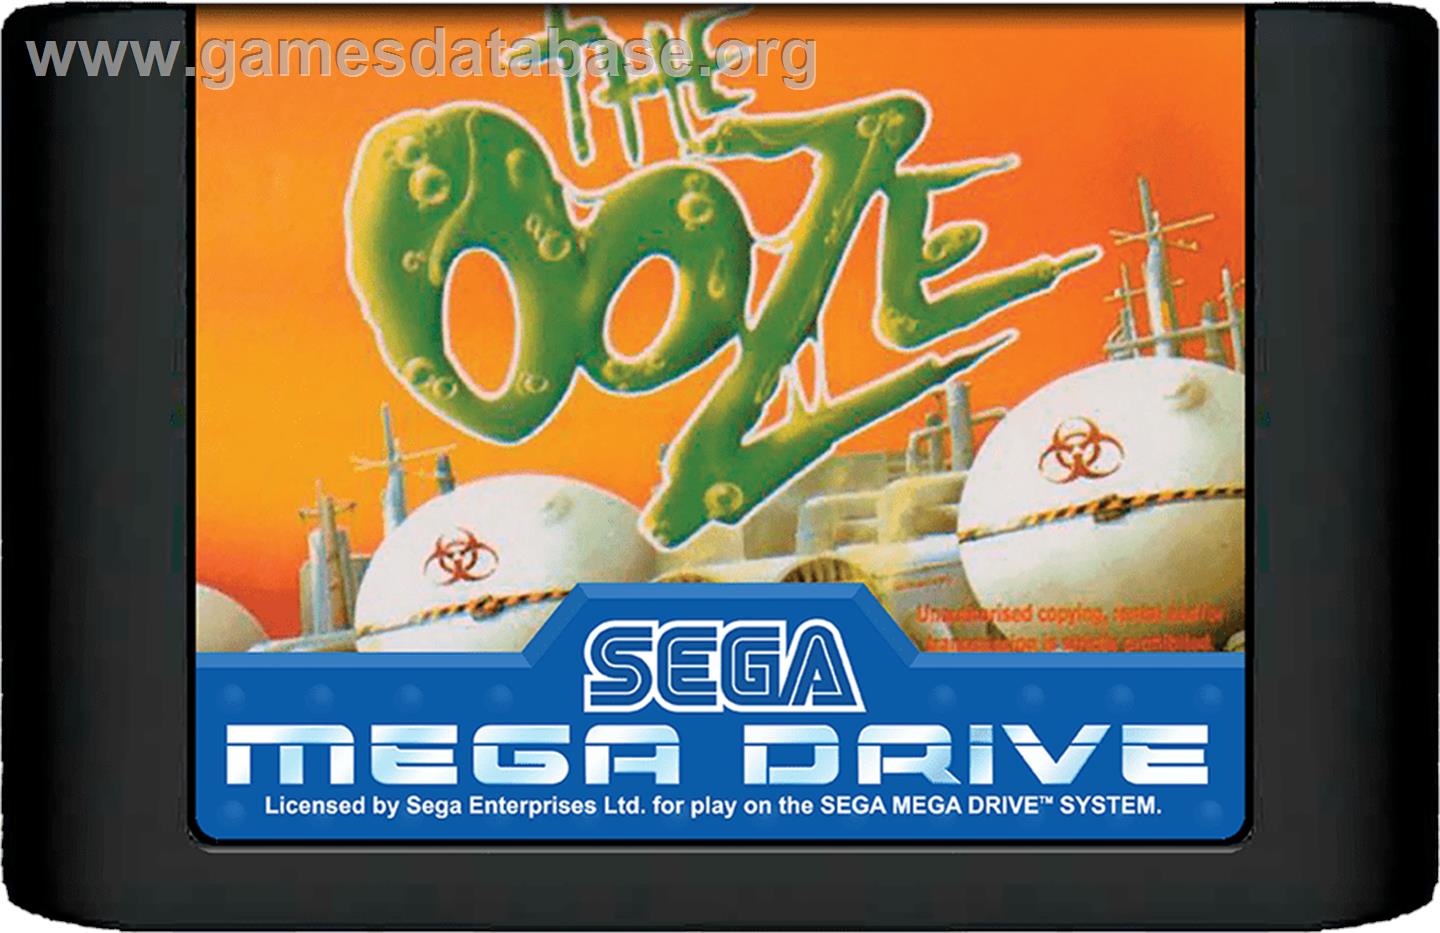 Ooze, The - Sega Genesis - Artwork - Cartridge